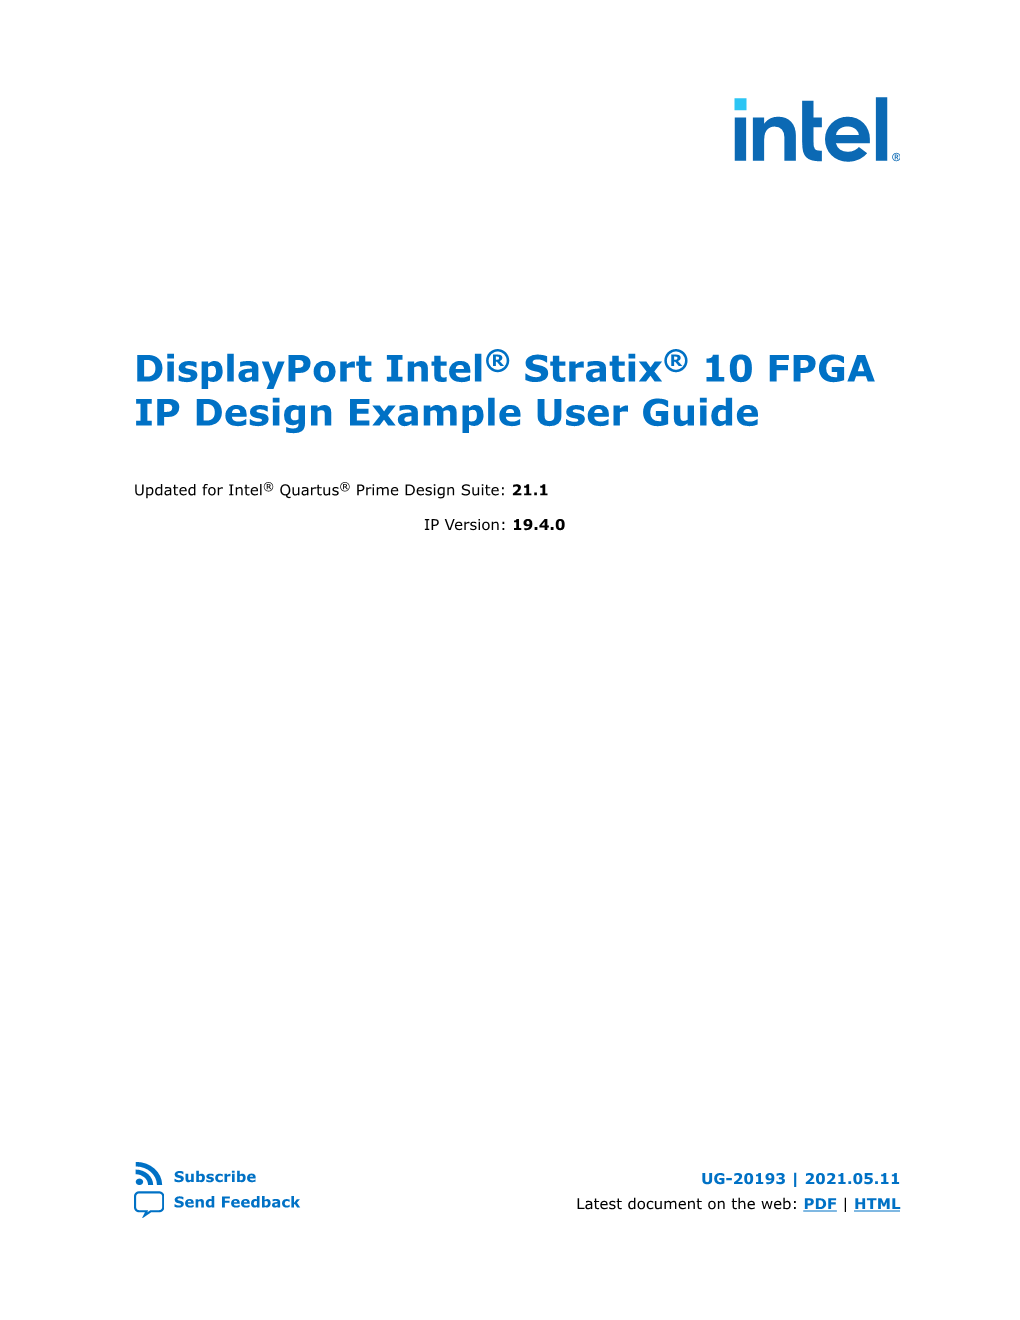 Displayport Intel® Stratix® 10 FPGA IP Design Example User Guide